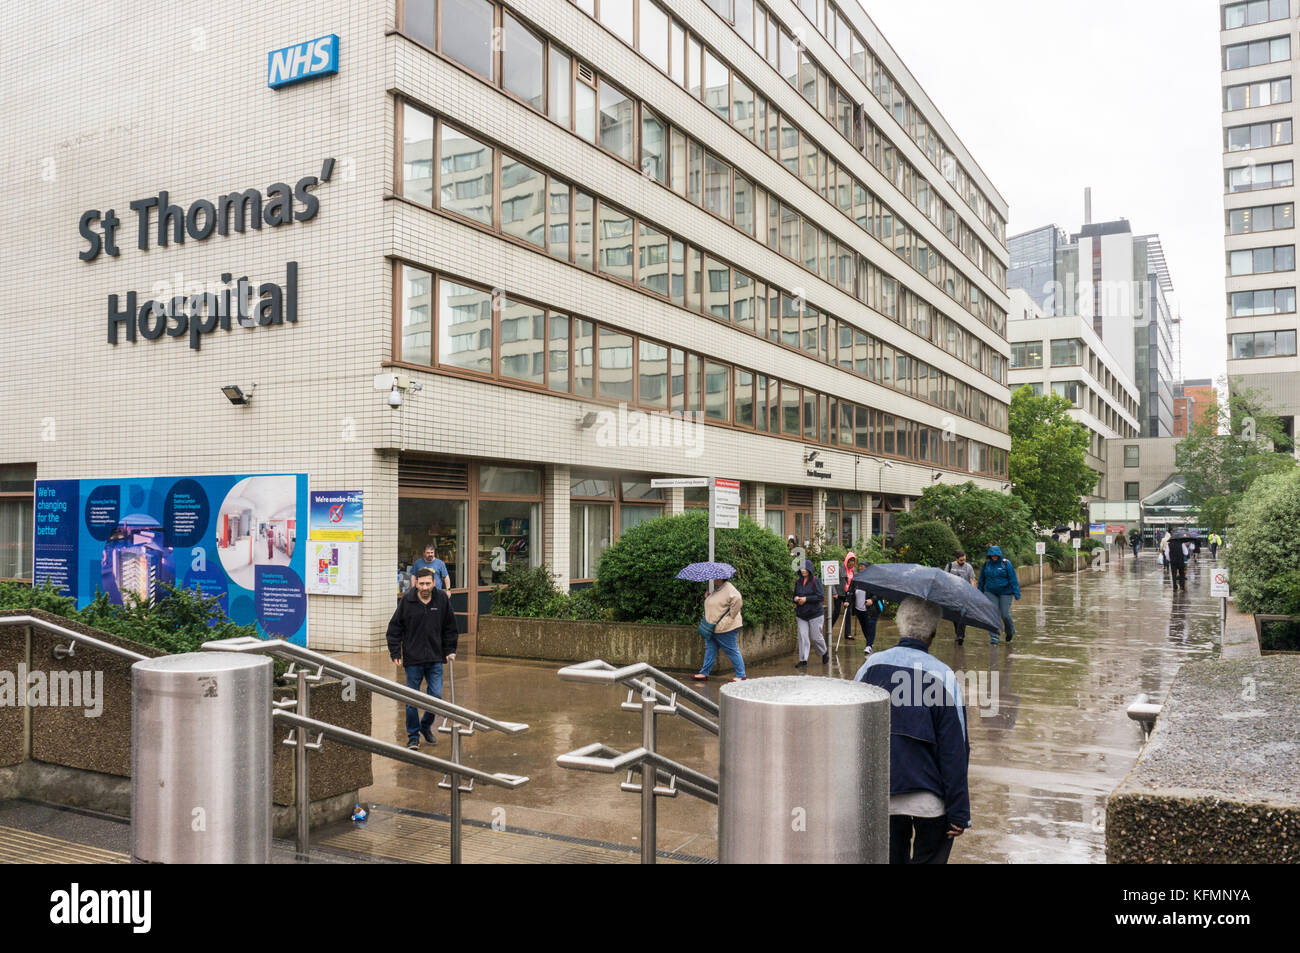 L'Hôpital St Thomas, Westminster, London, England, GB, UK Banque D'Images